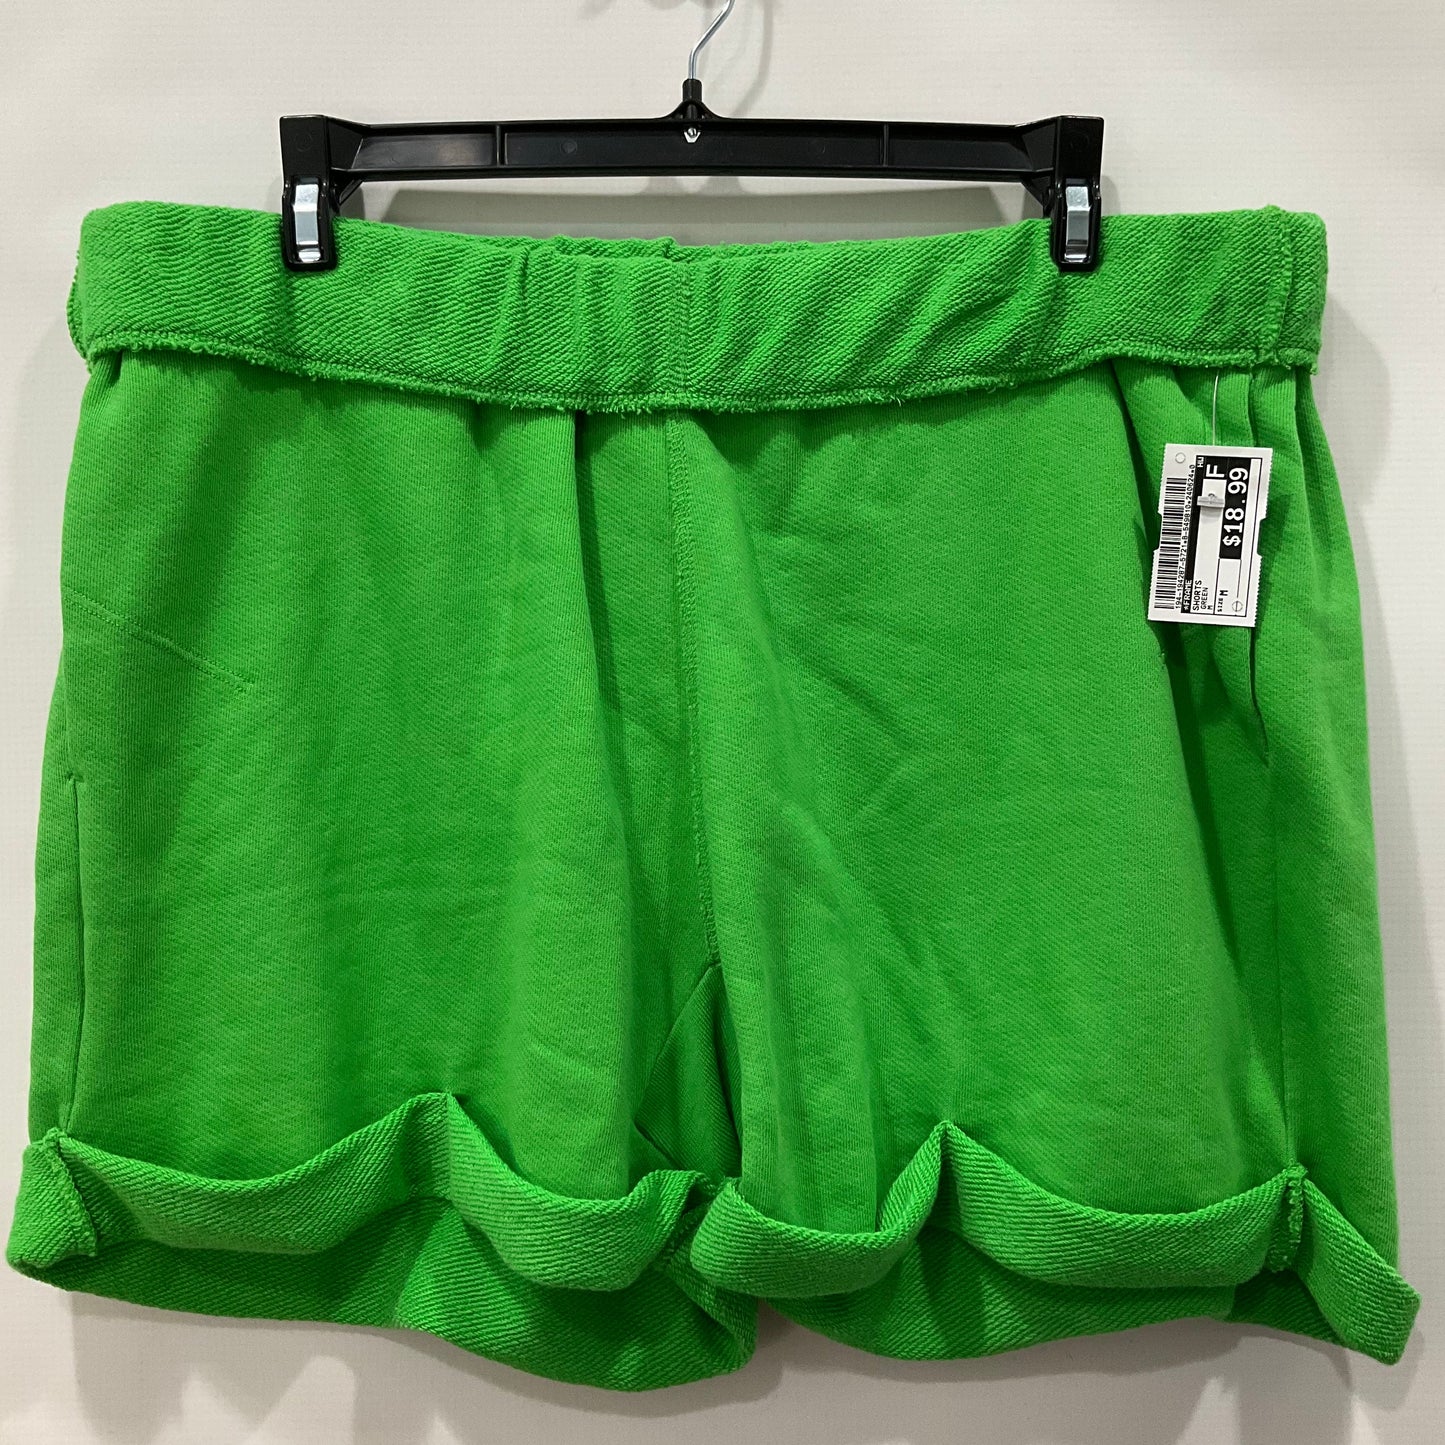 Green Shorts Frame, Size M